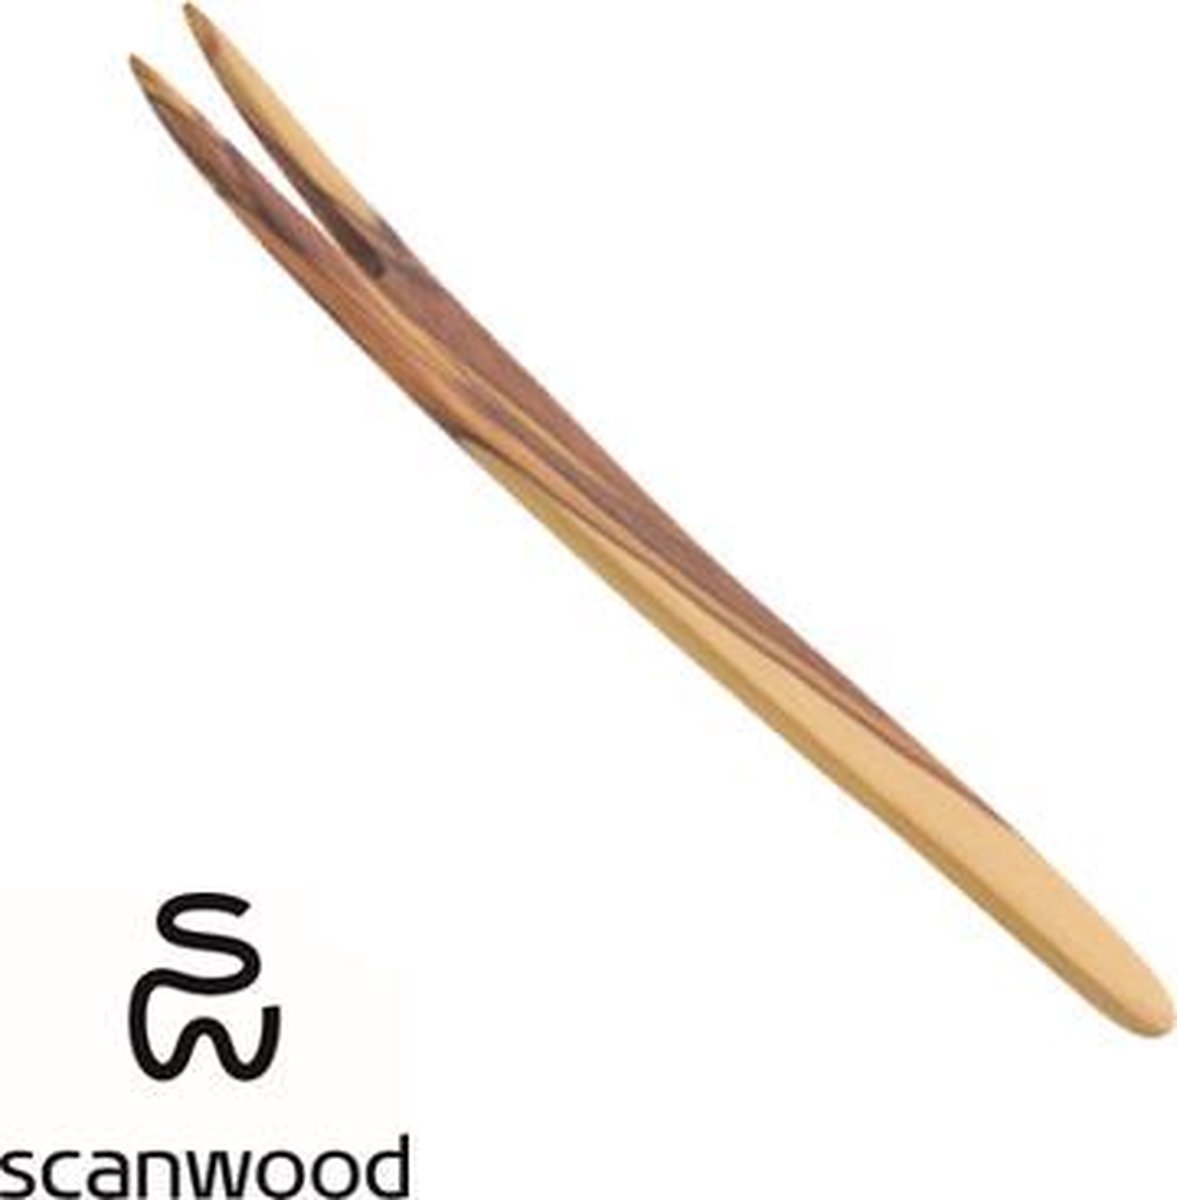 Scanwood kaasvork olijfhout 30 cm